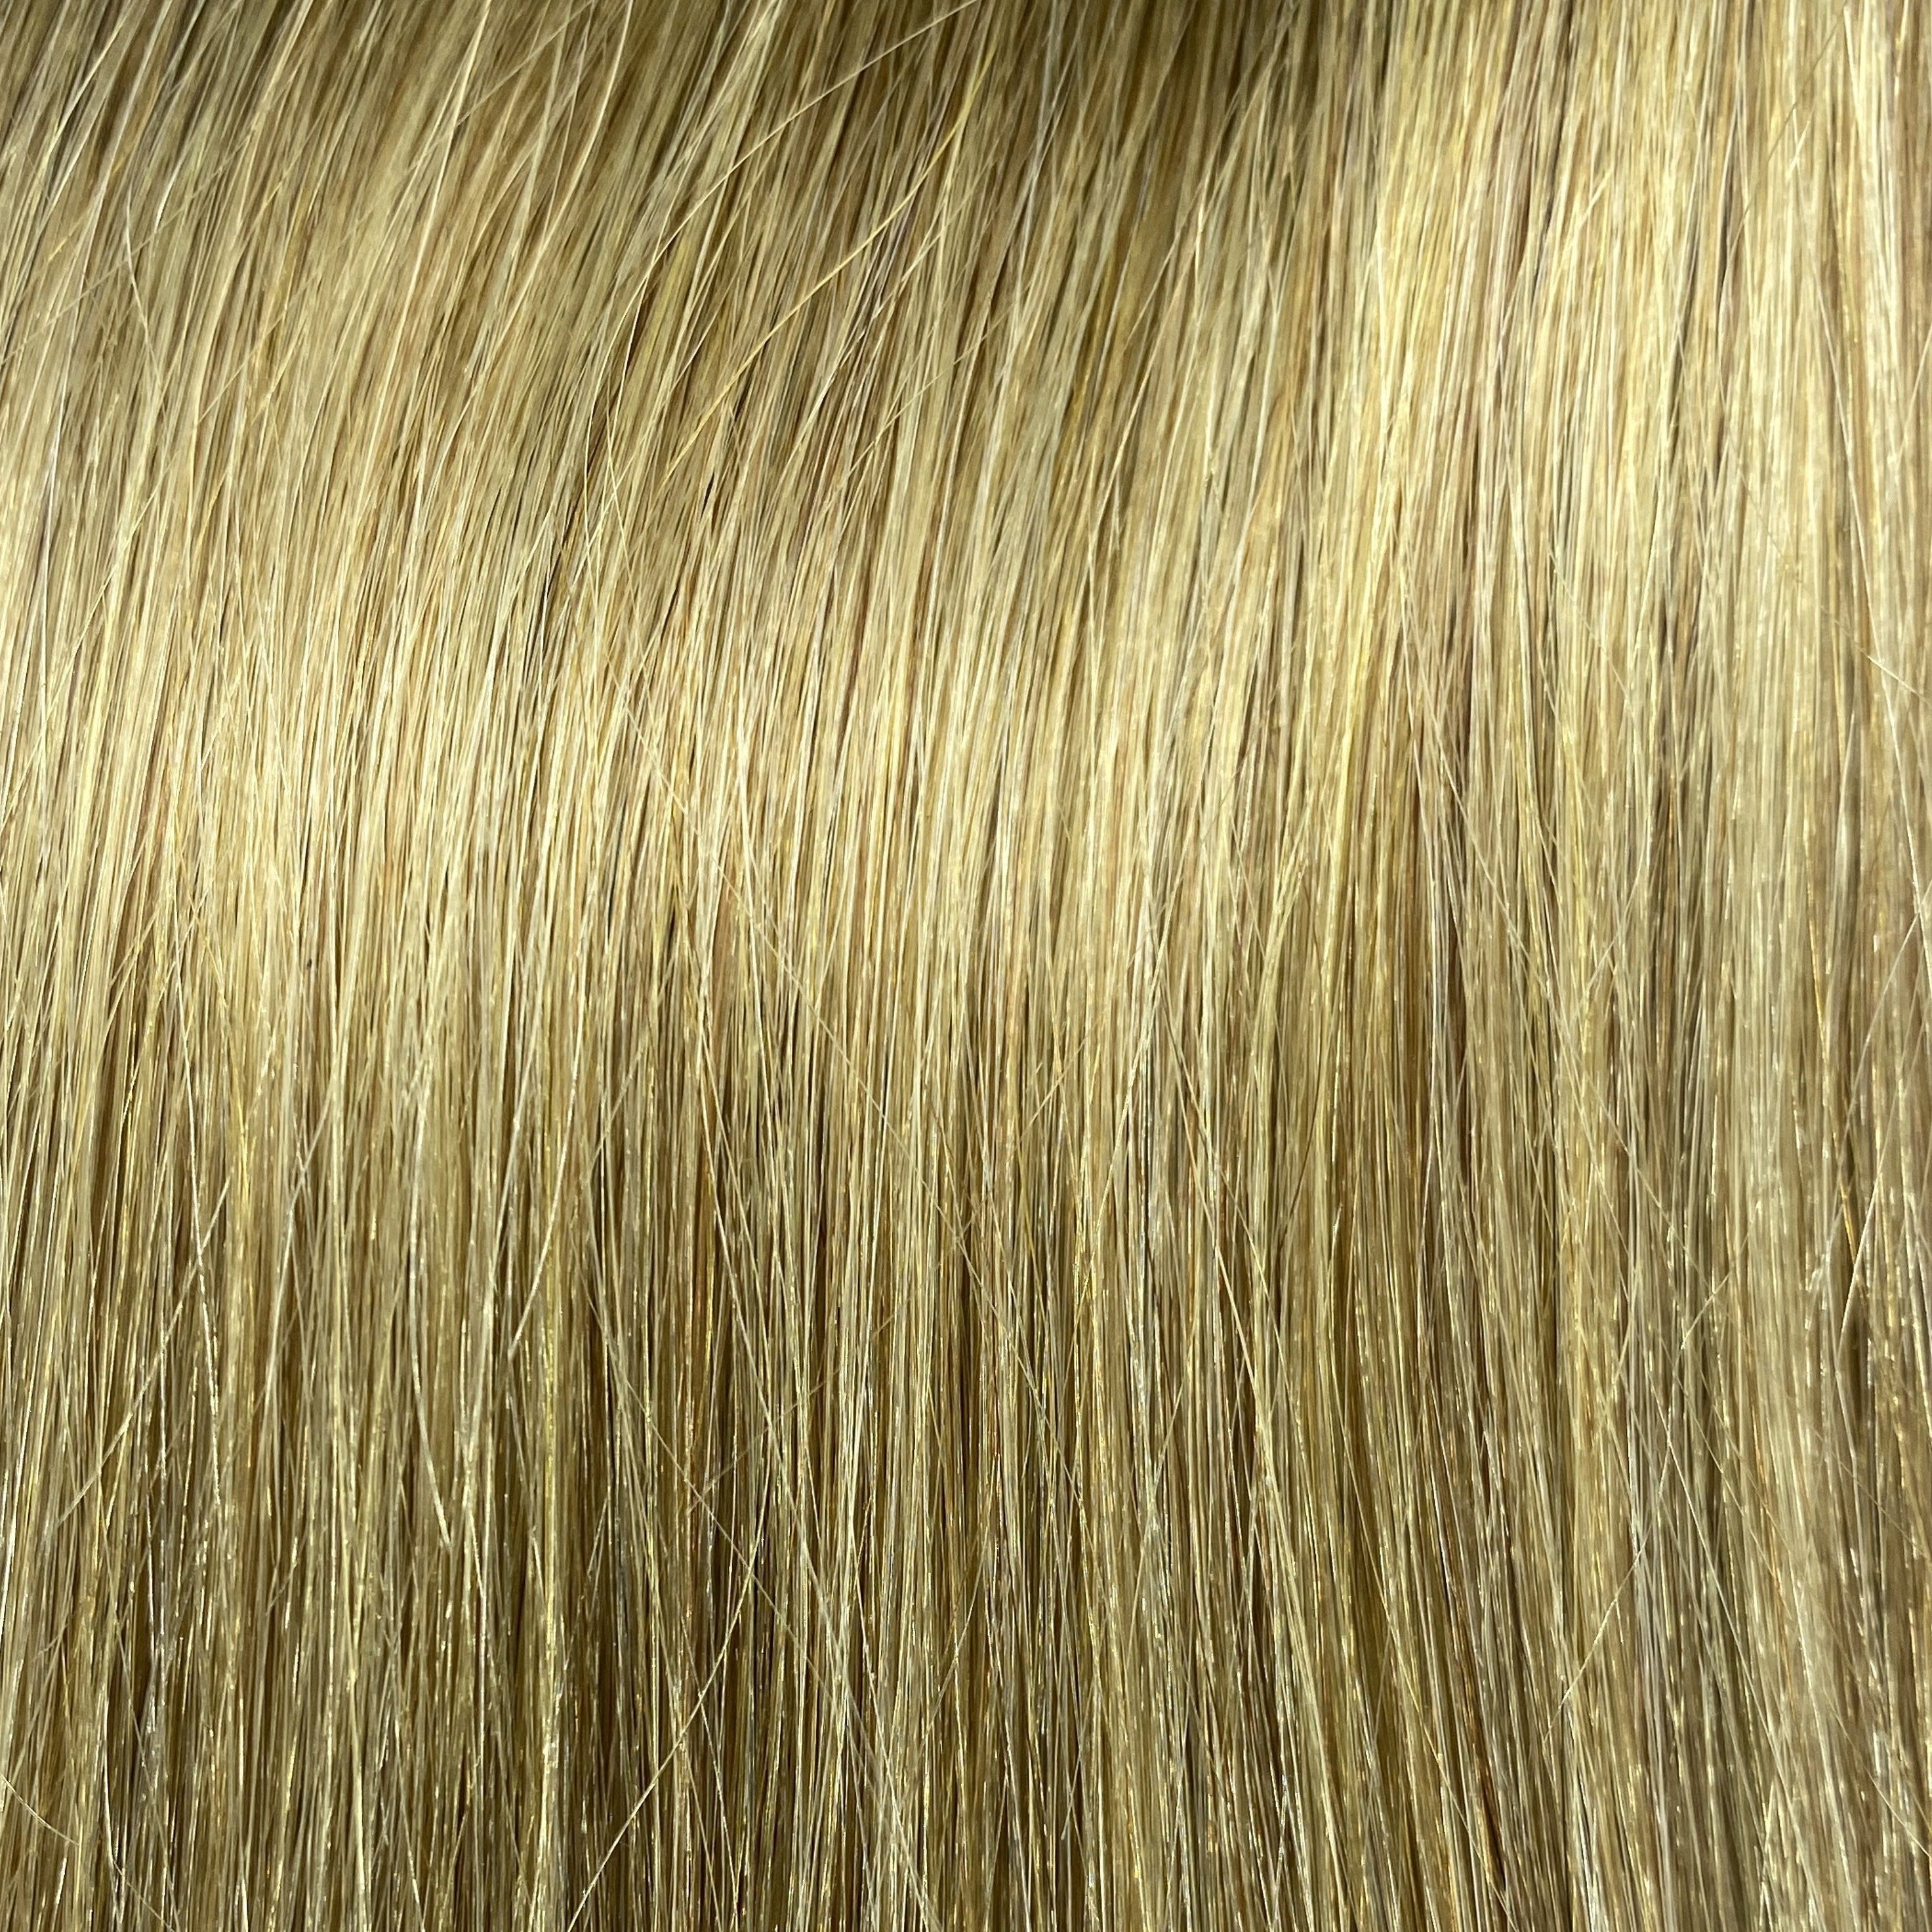 Velo Sale #4&10 - 20 inches - Light Chestnut into Dark Blonde Ombre - Image 1